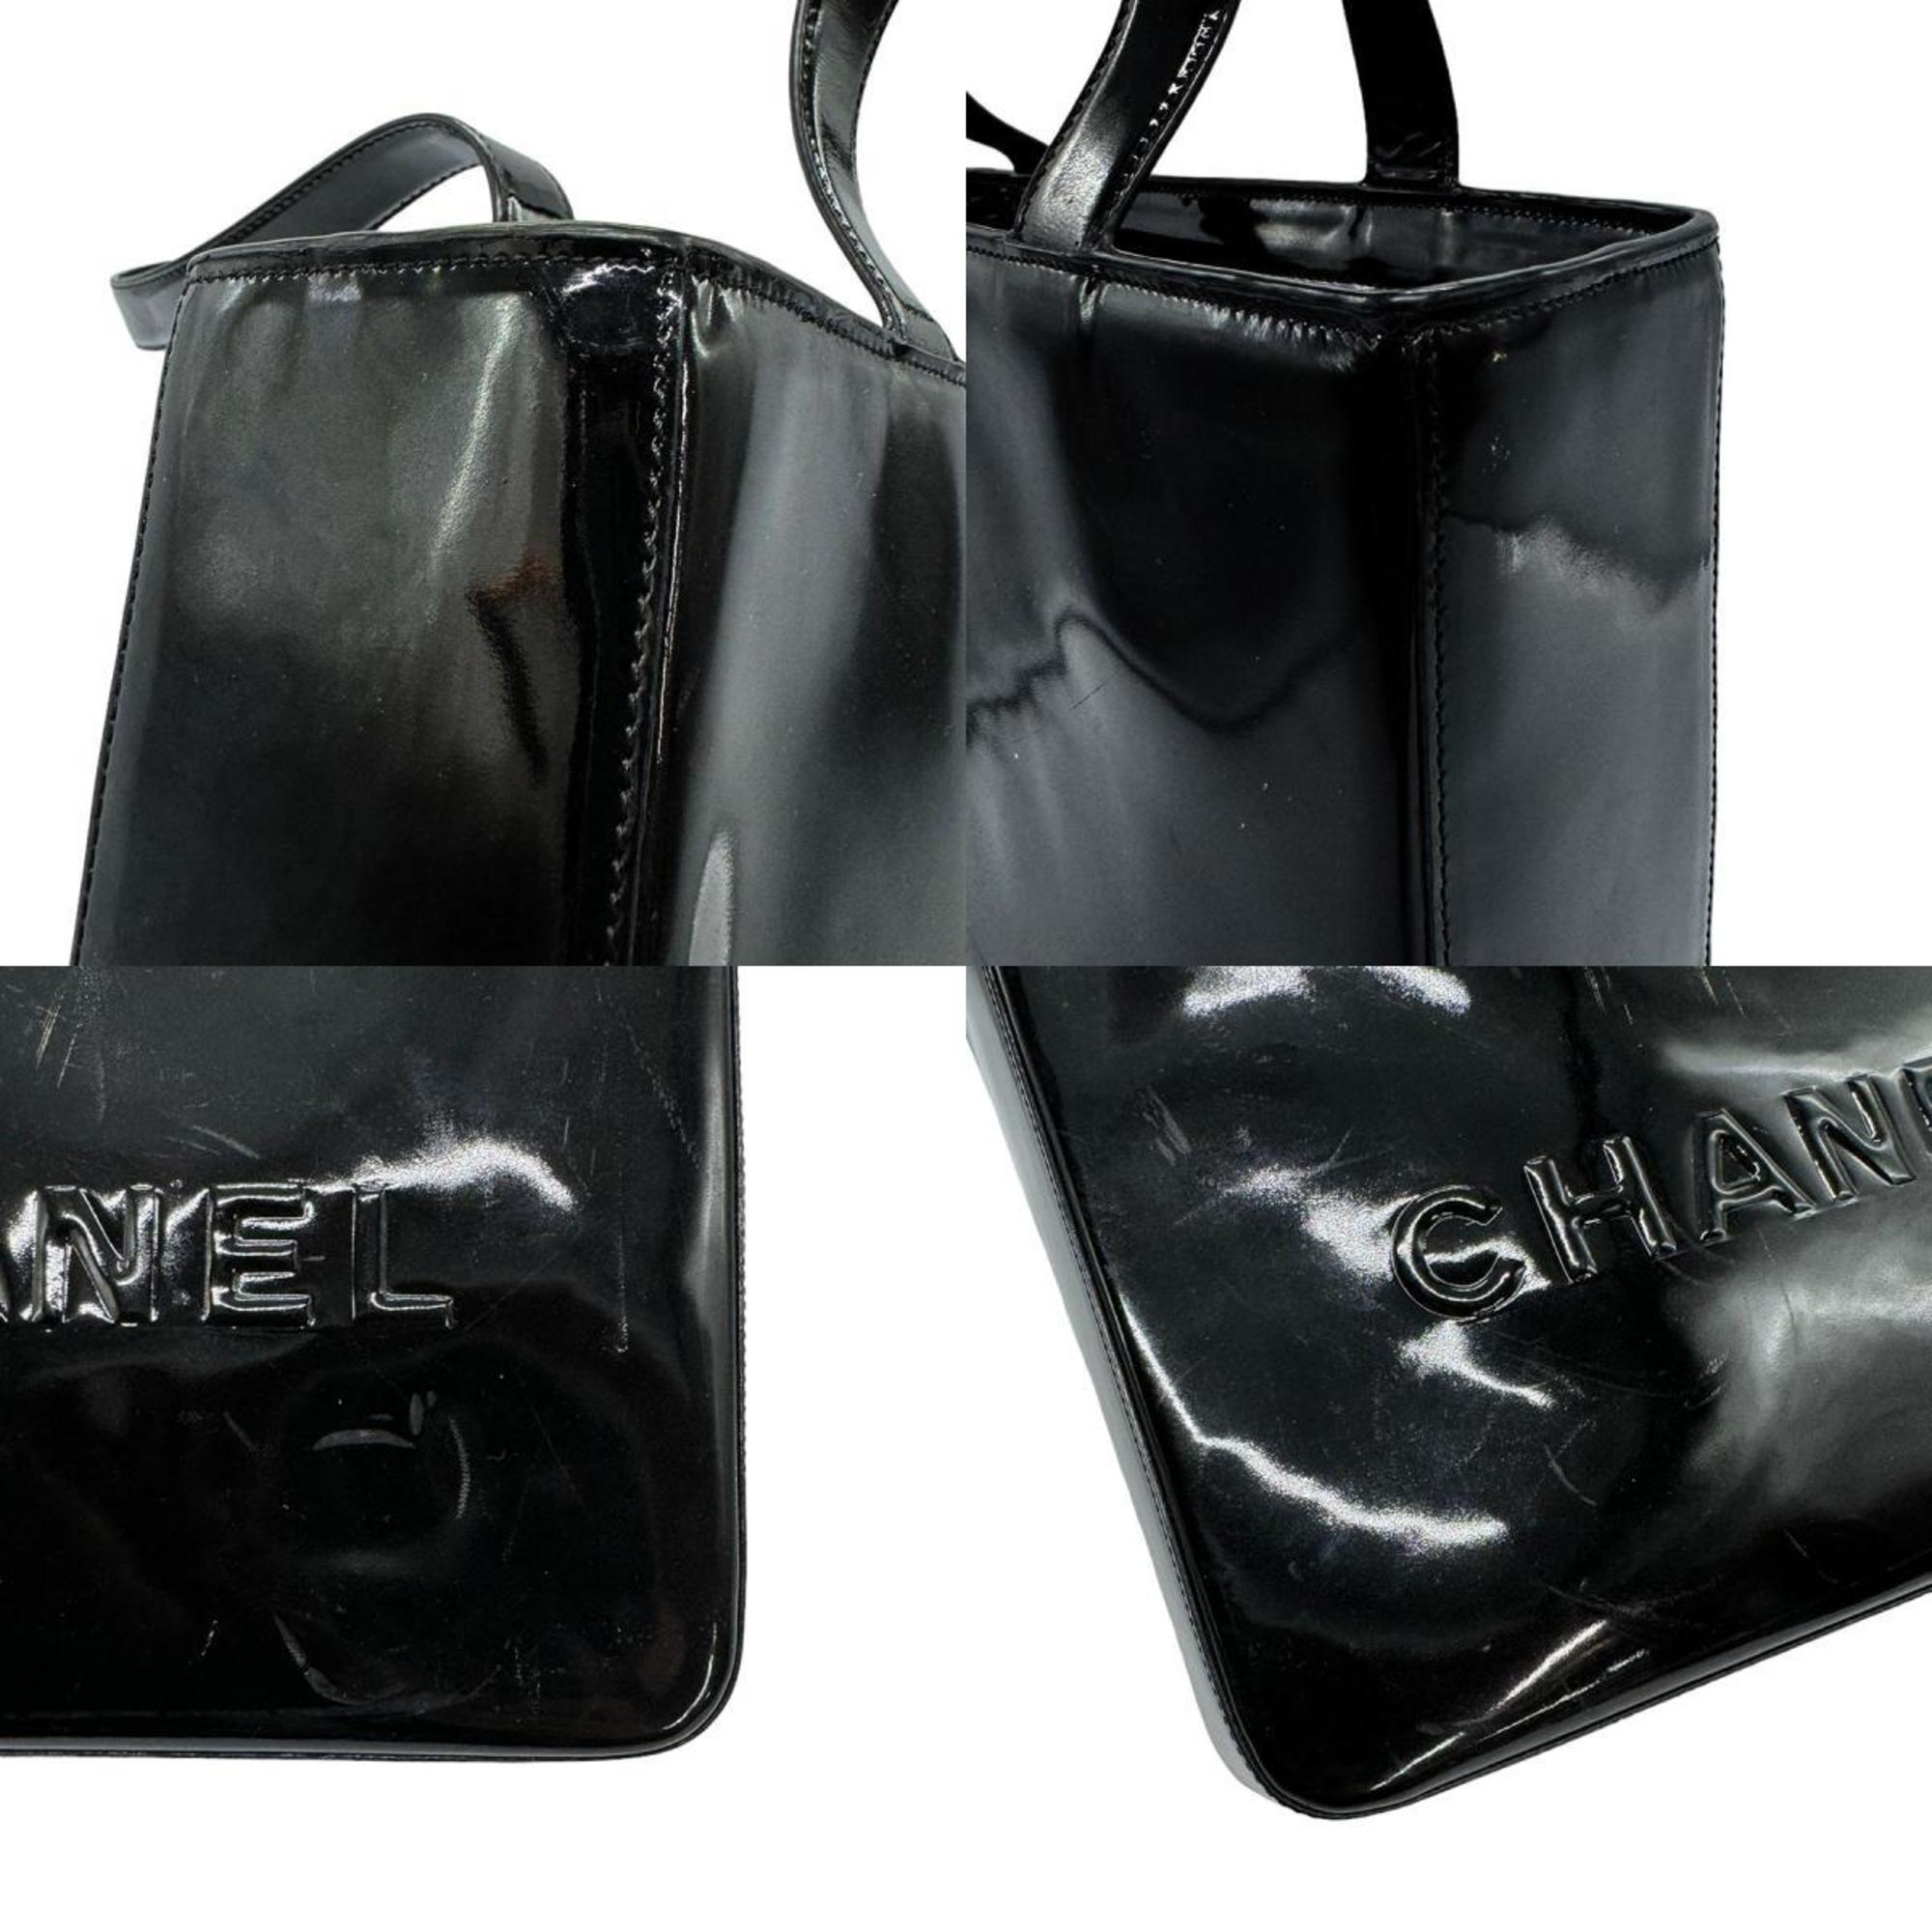 CHANEL handbag patent leather black ladies z0615